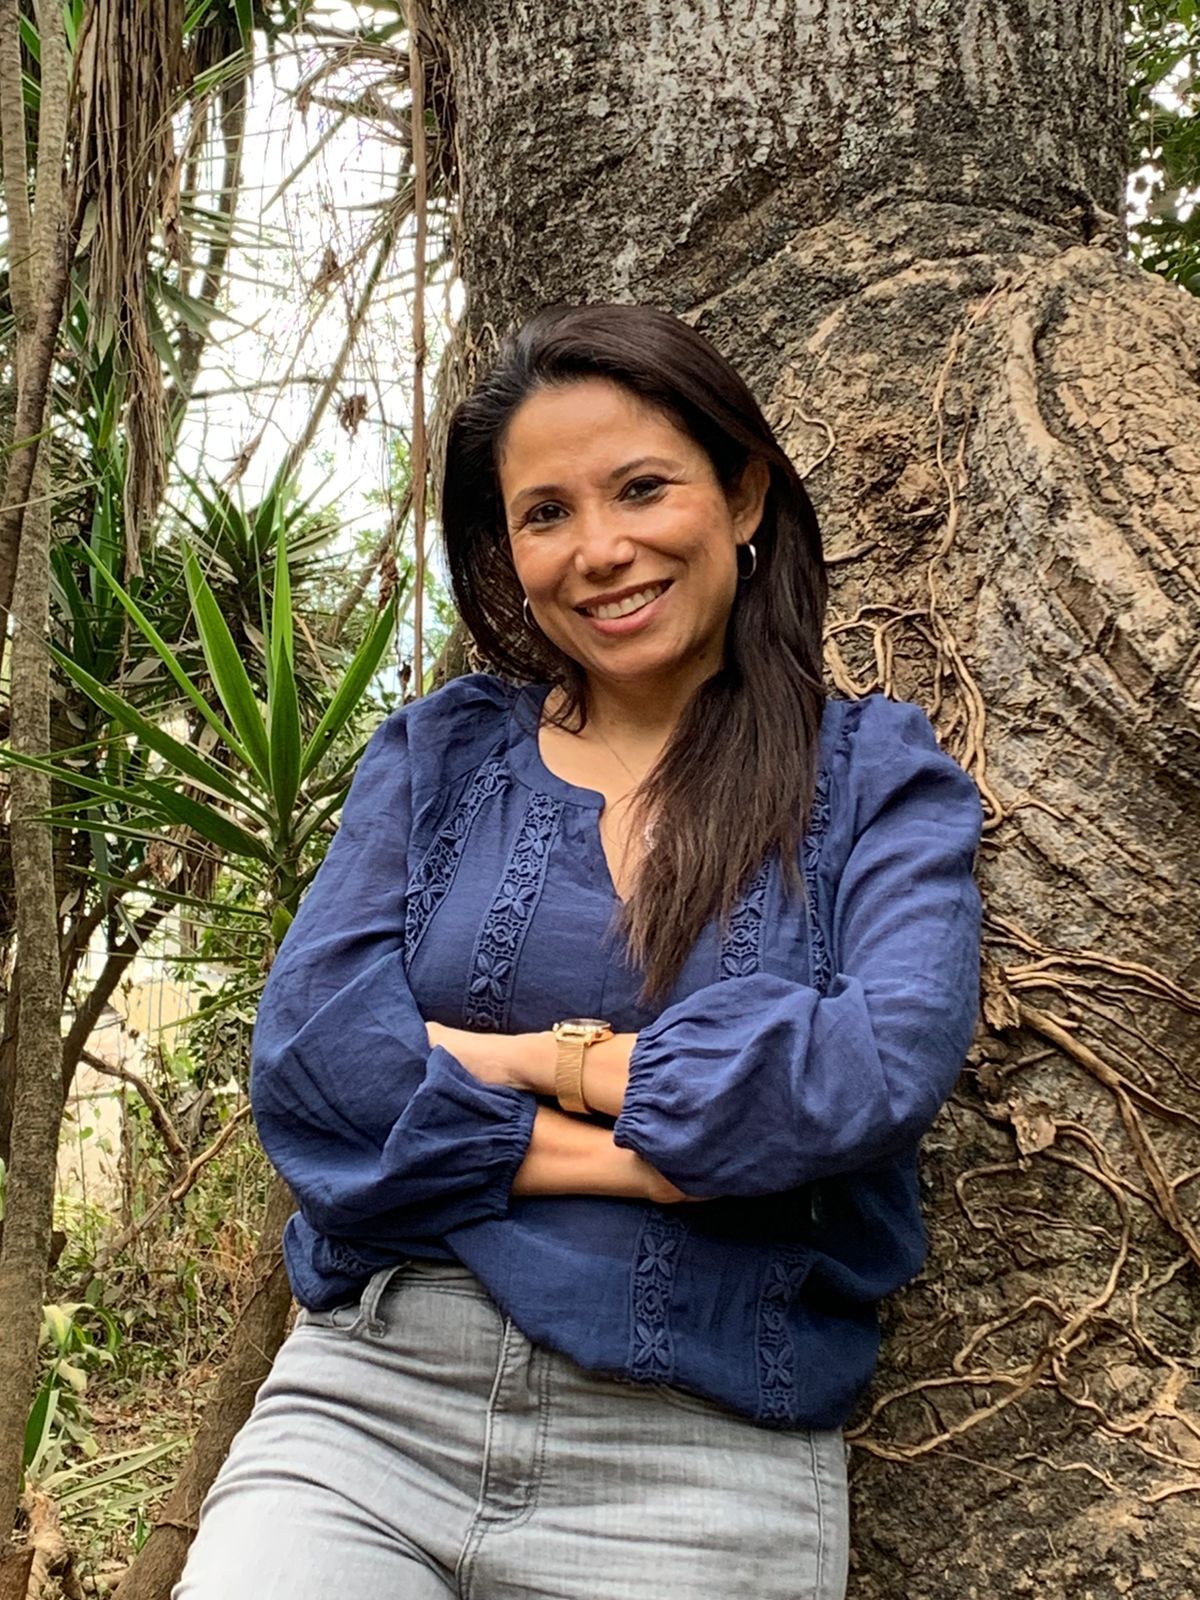 For Claudia Medrano, preventing child labor in Guatemala’s coffee landscapes is personal.